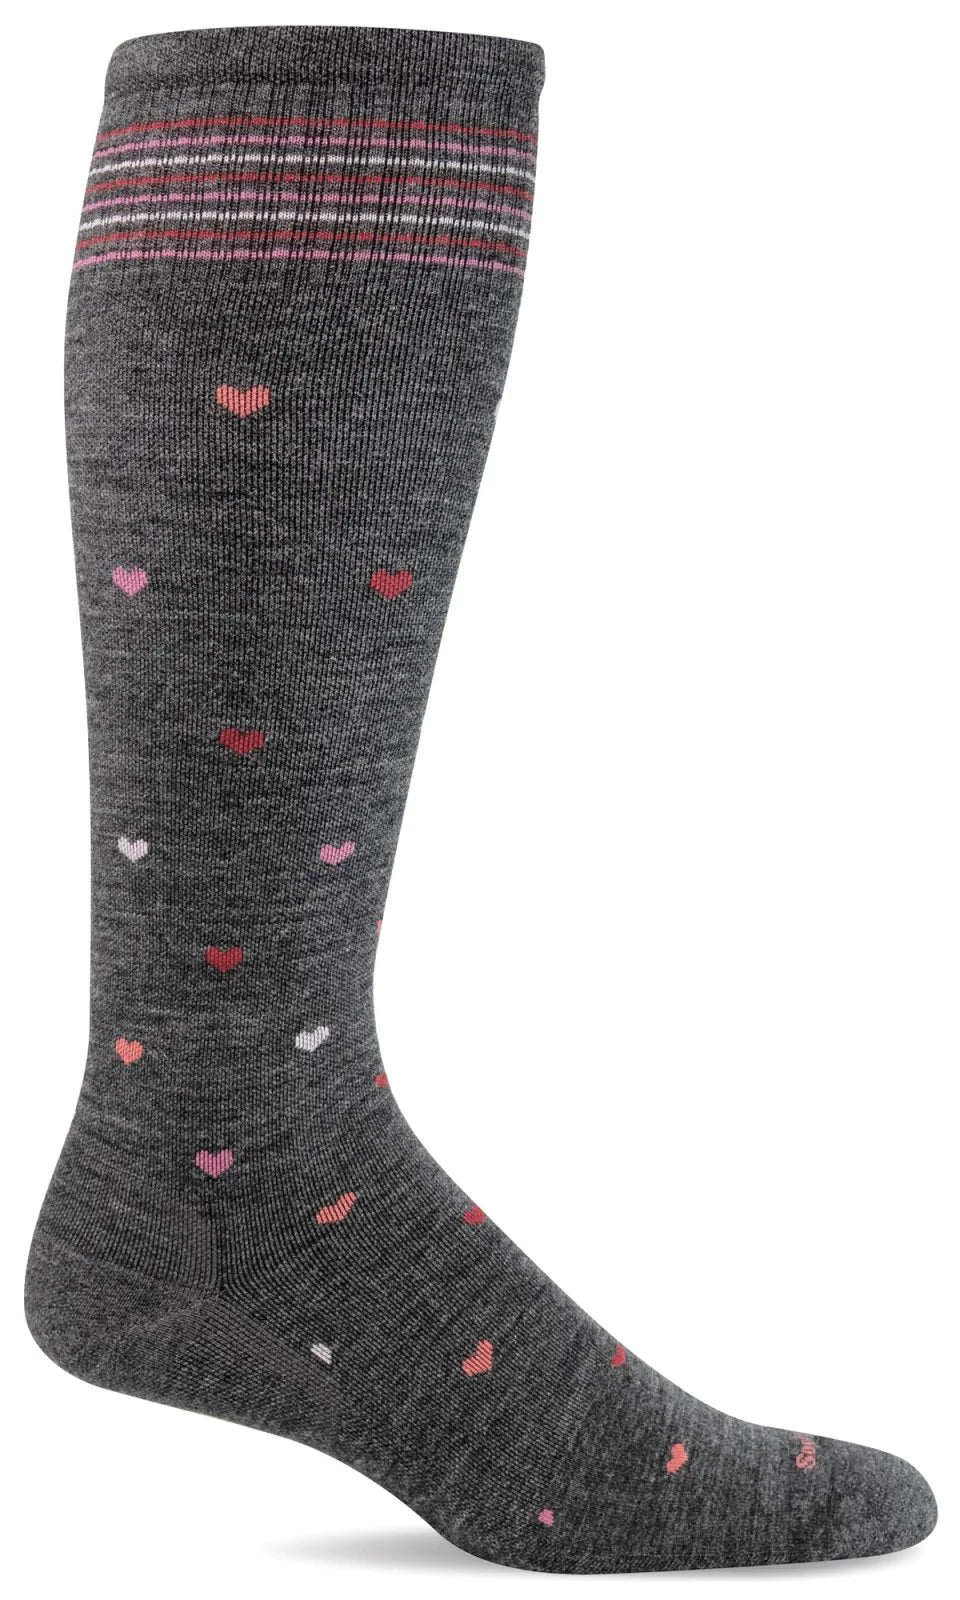 Black Charcoal - Grip Socks - Wide calf, Compression Socks